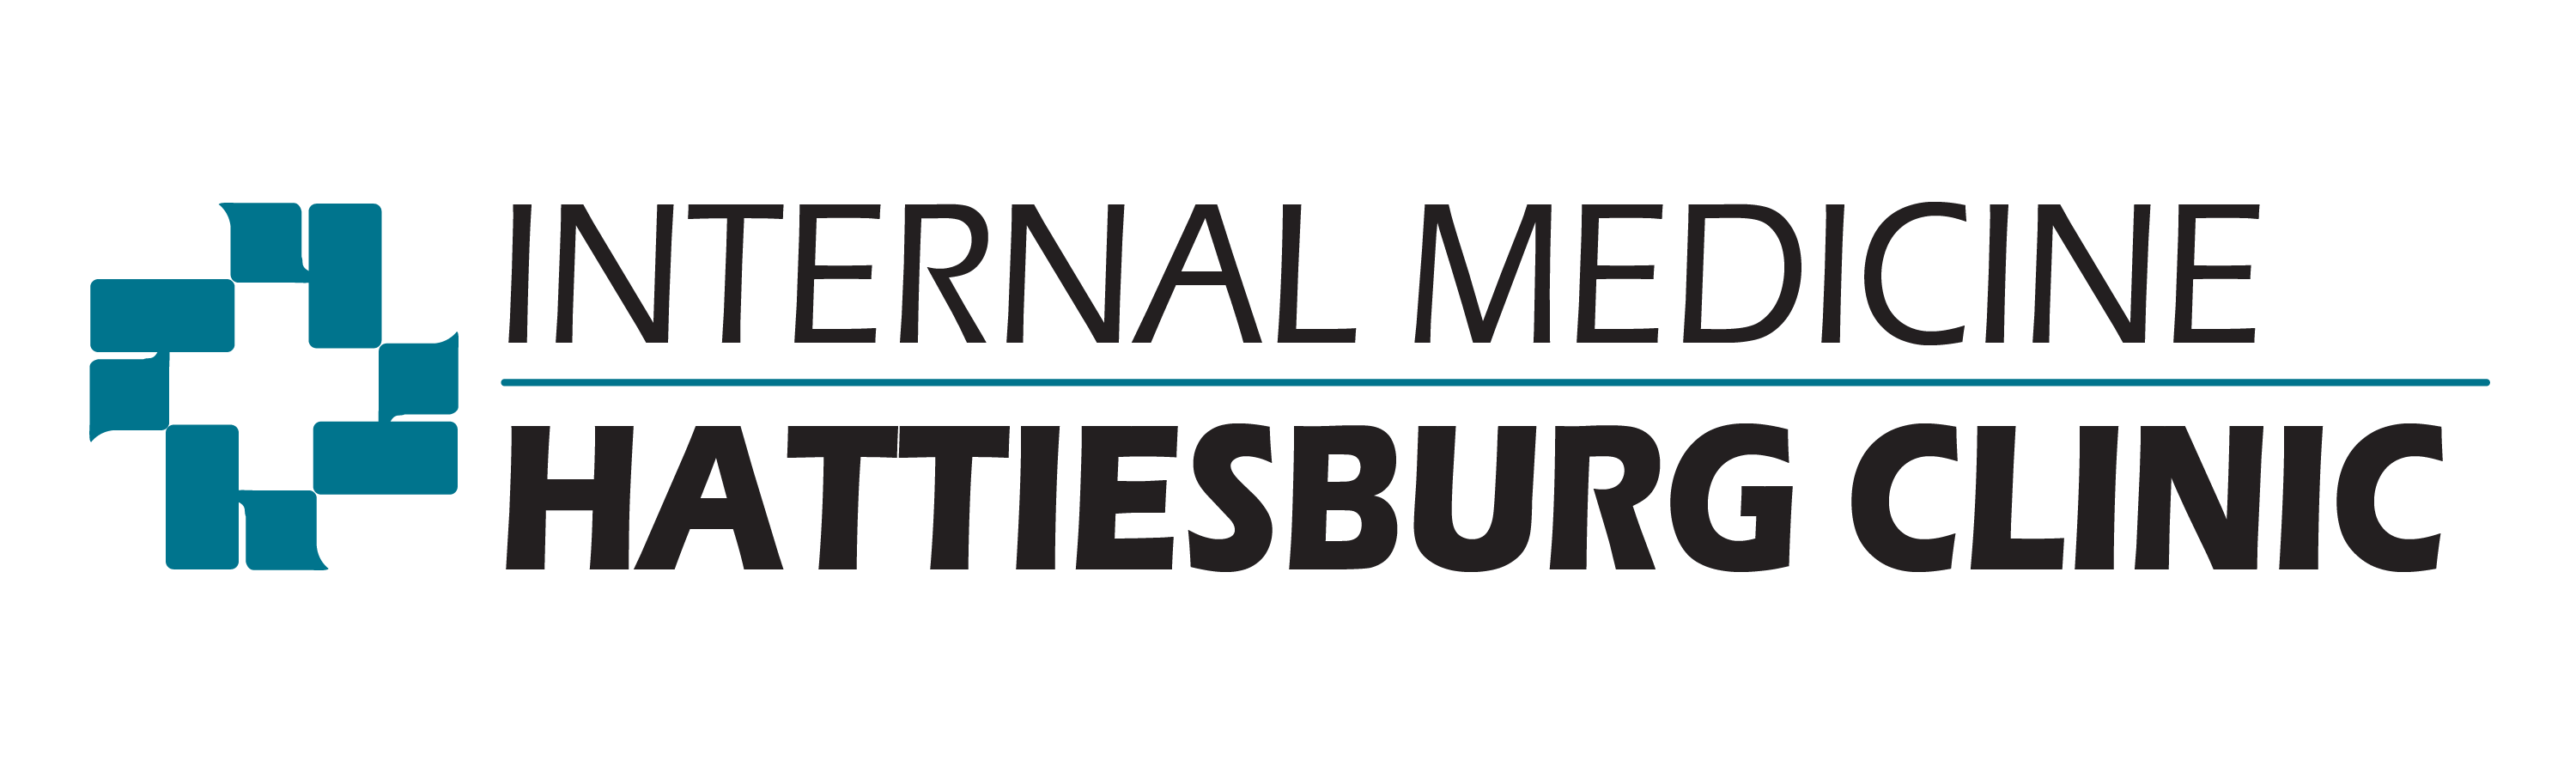 Internal Medicine logo